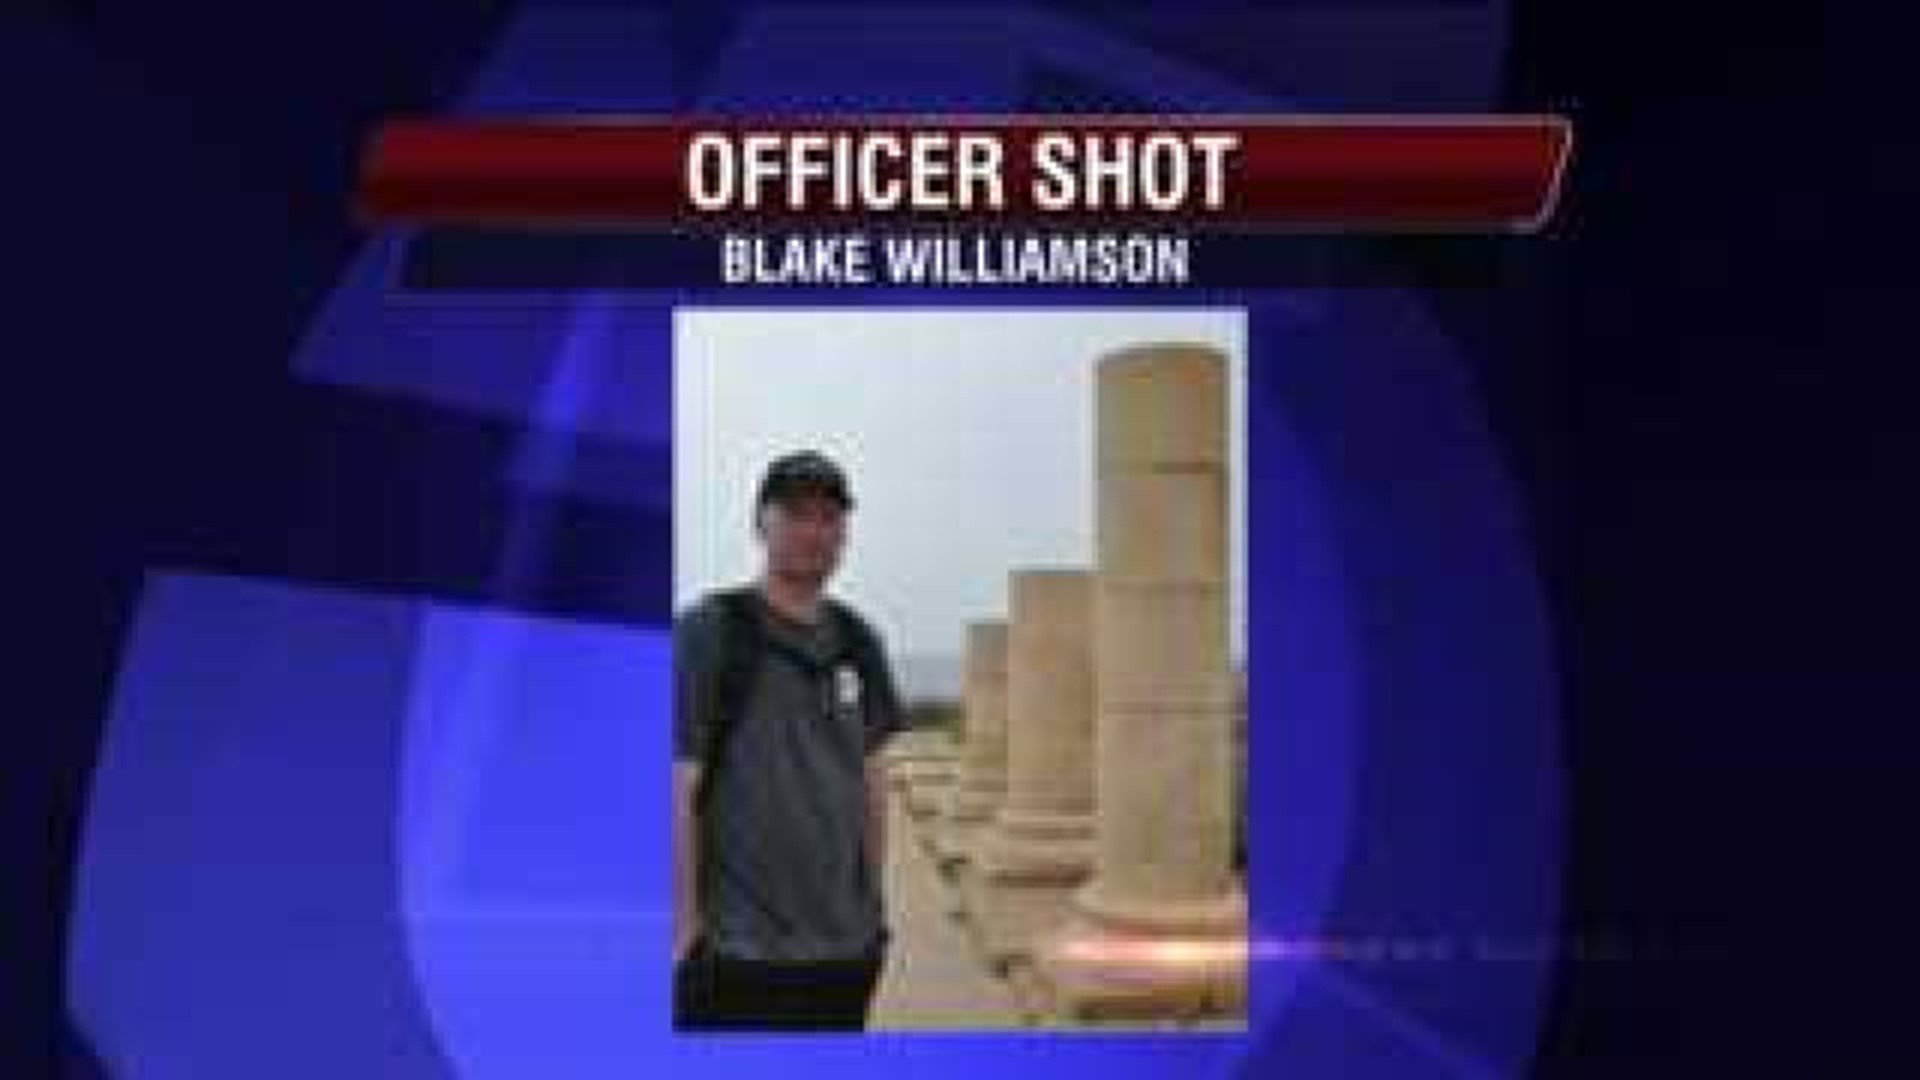 OFFICER BLAKE WILLIAMSON UPDATE